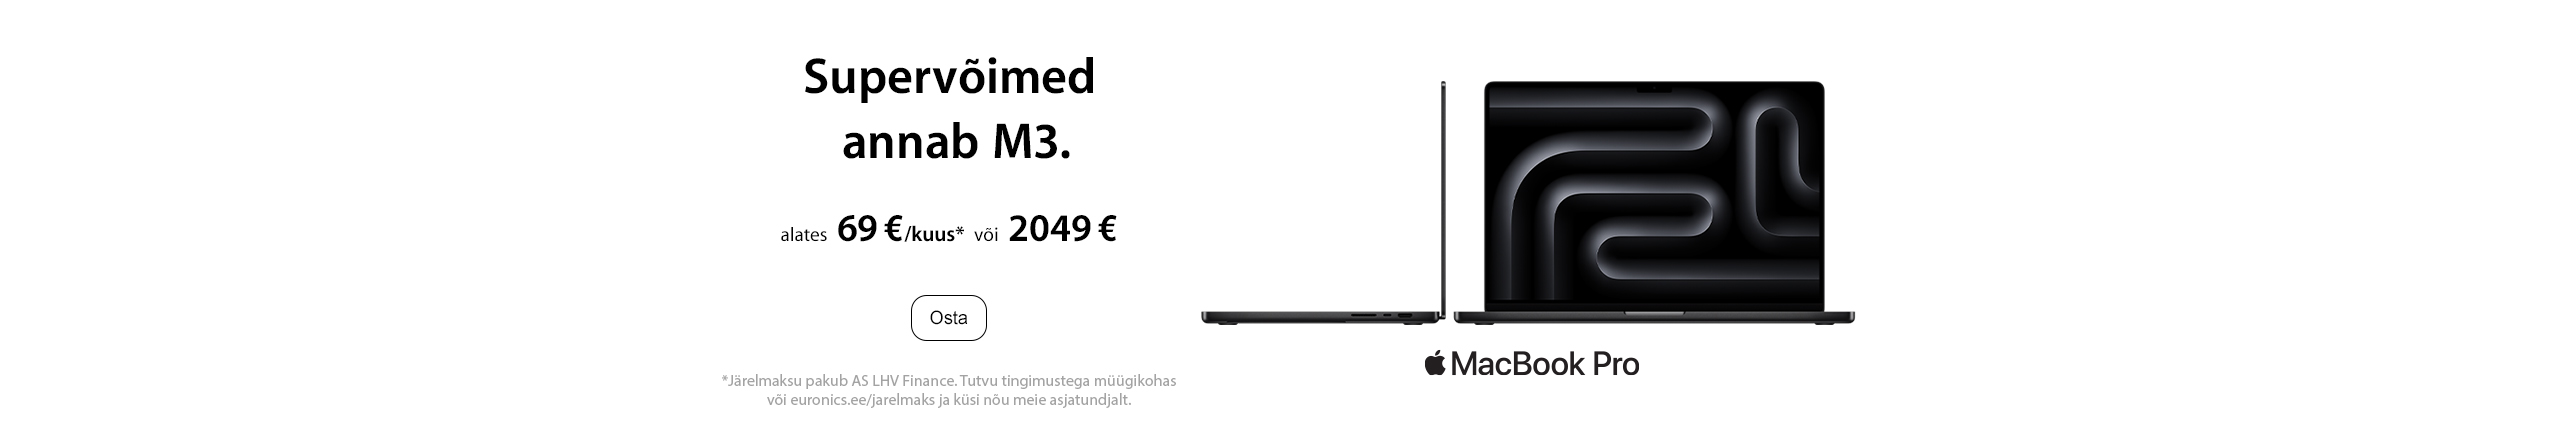 Uus Apple MacBook Pro